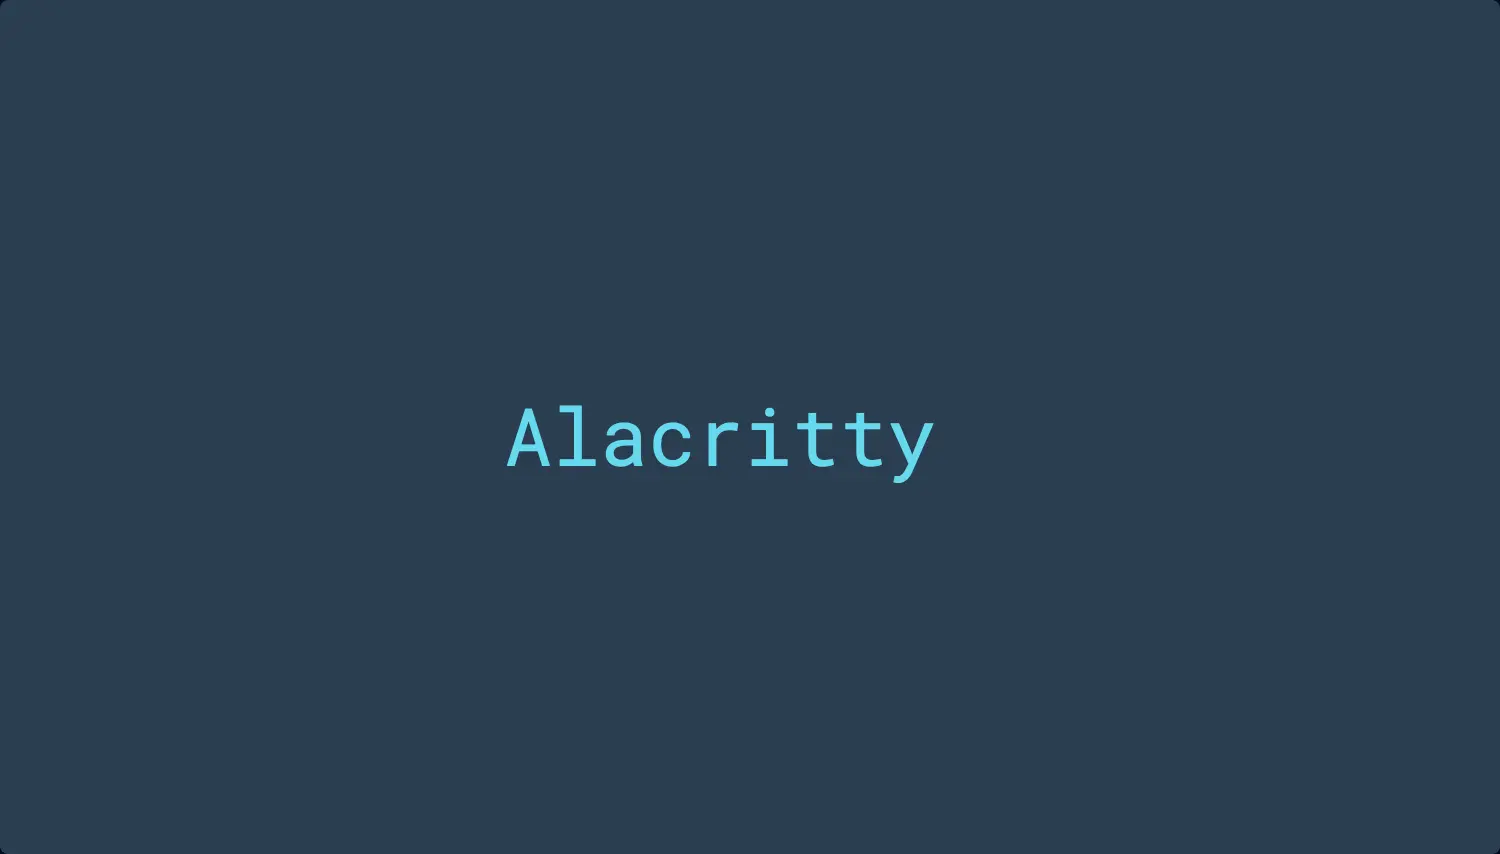 Introduce Alacritty - The Fastest Terminal